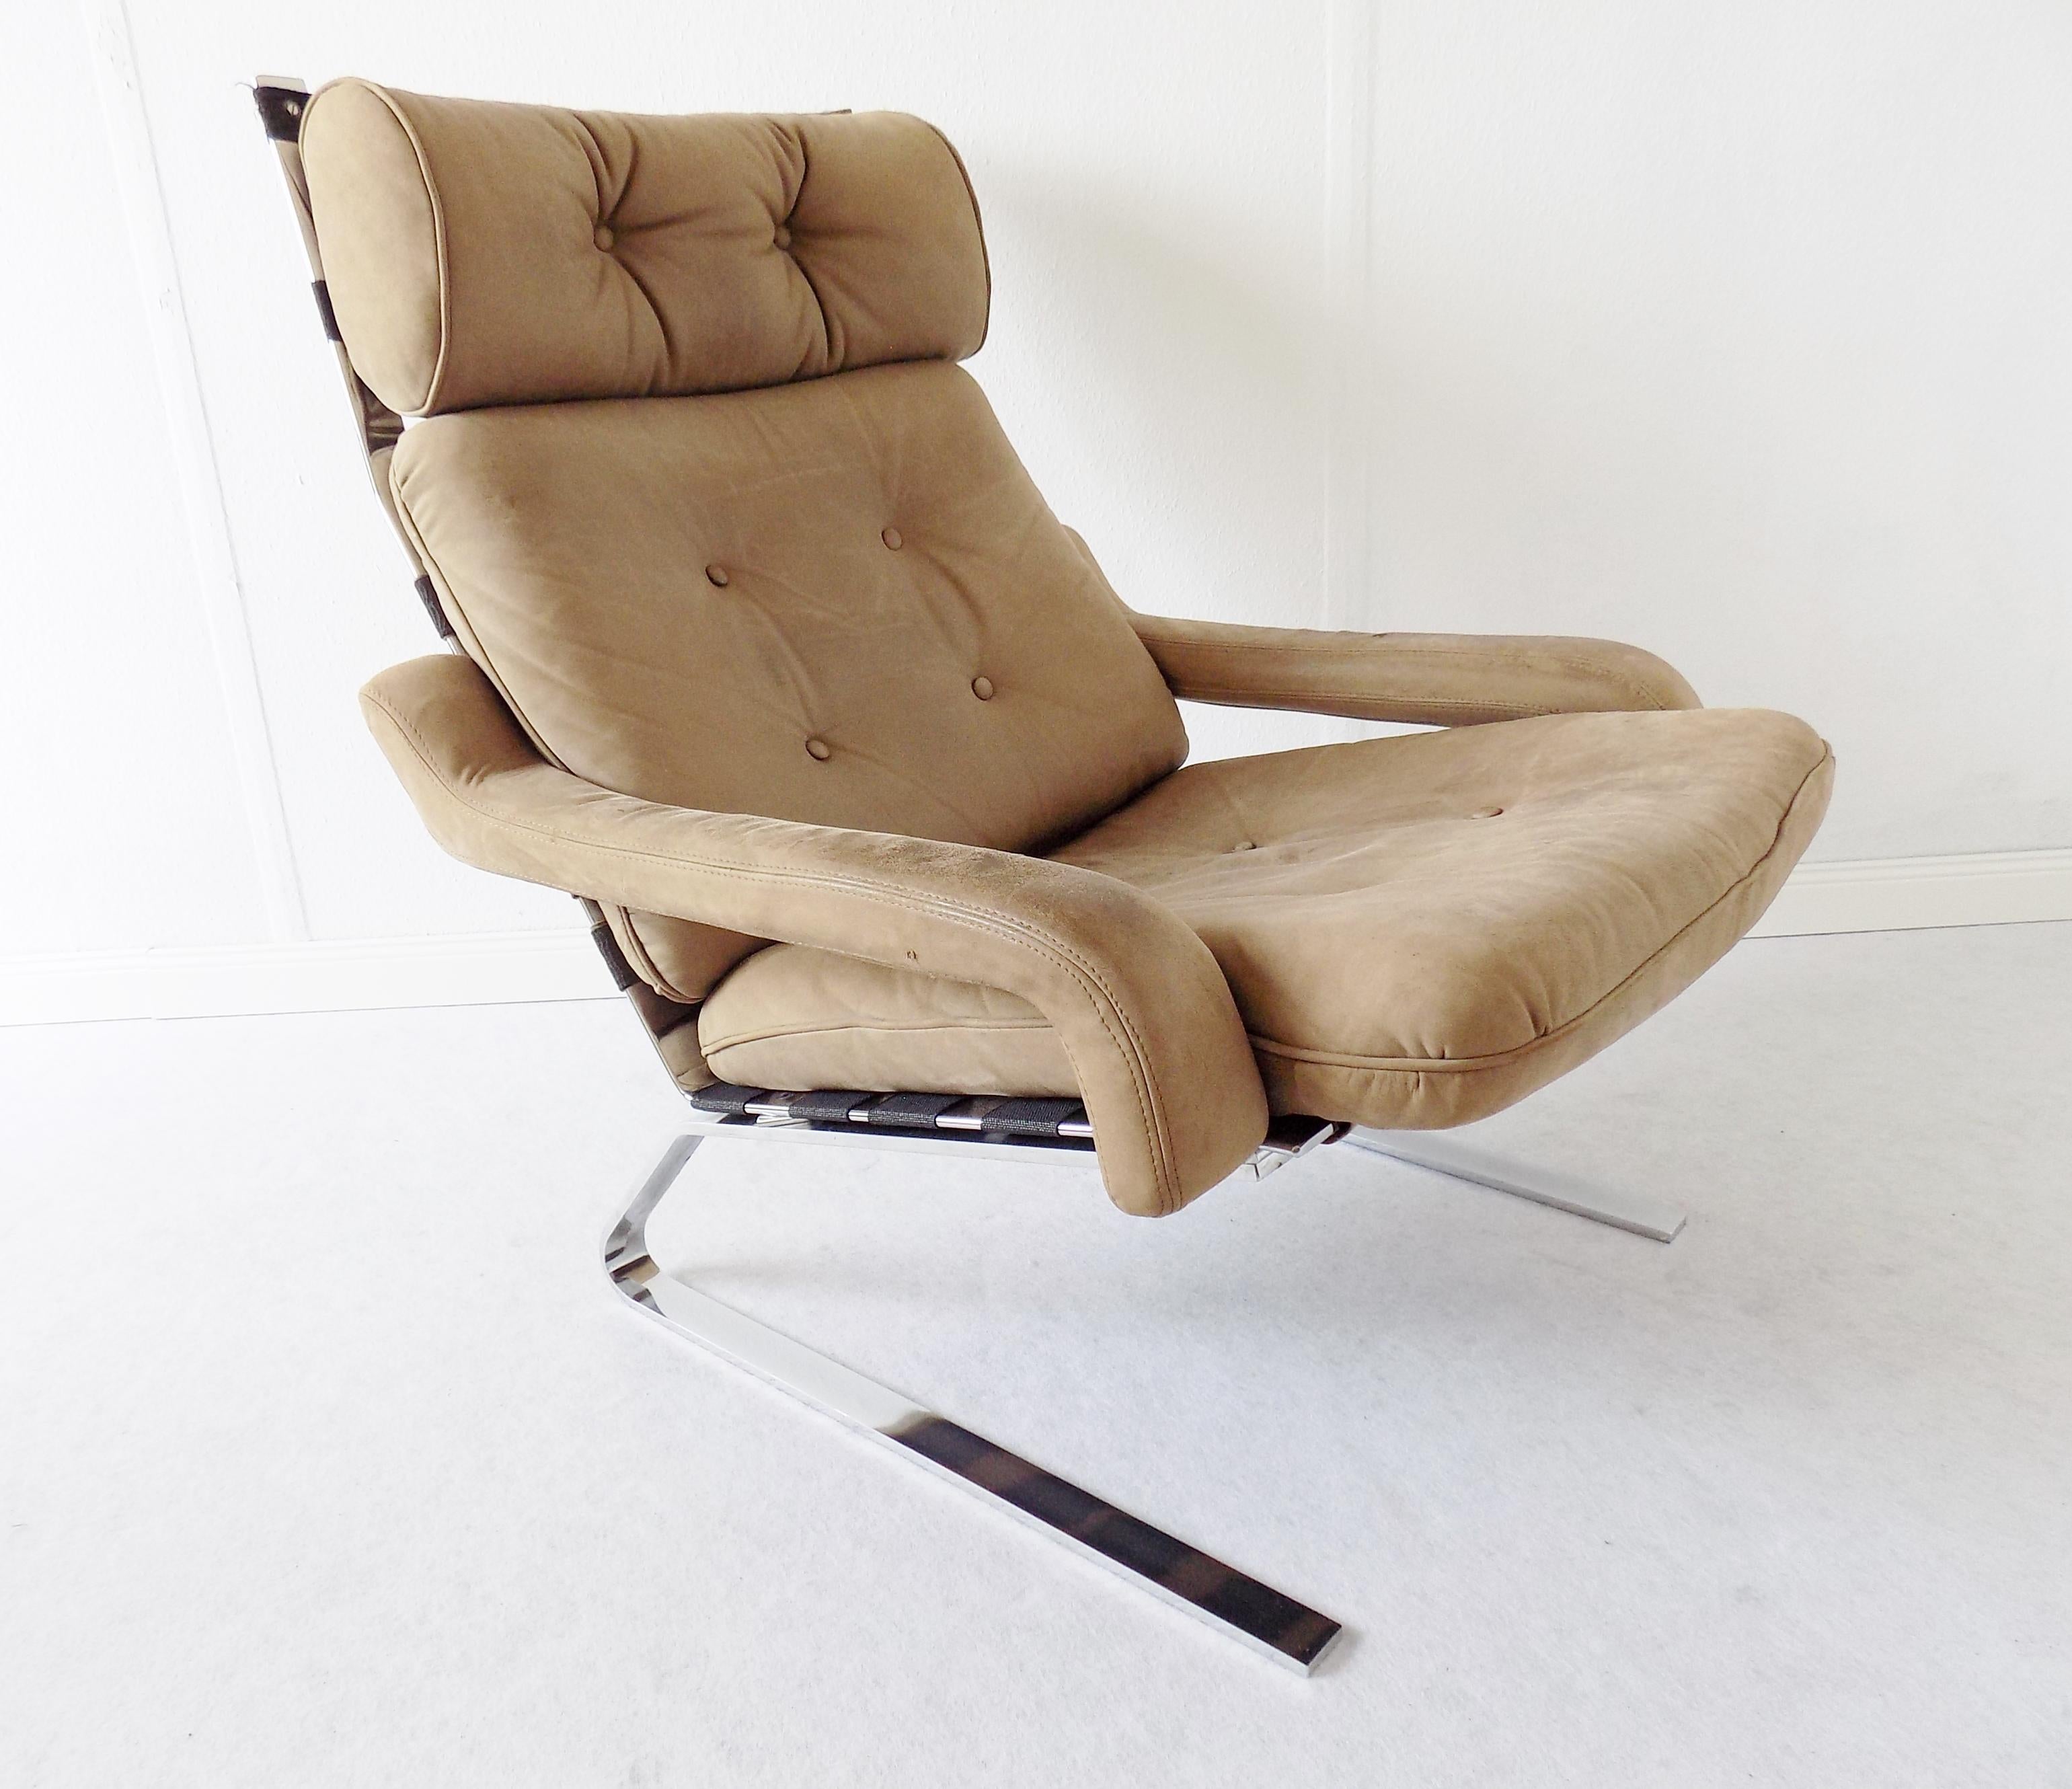 Leather Danish Swing Lounge Chair with ottoman, Nubuk leather, Mid-Century modern, Chrom